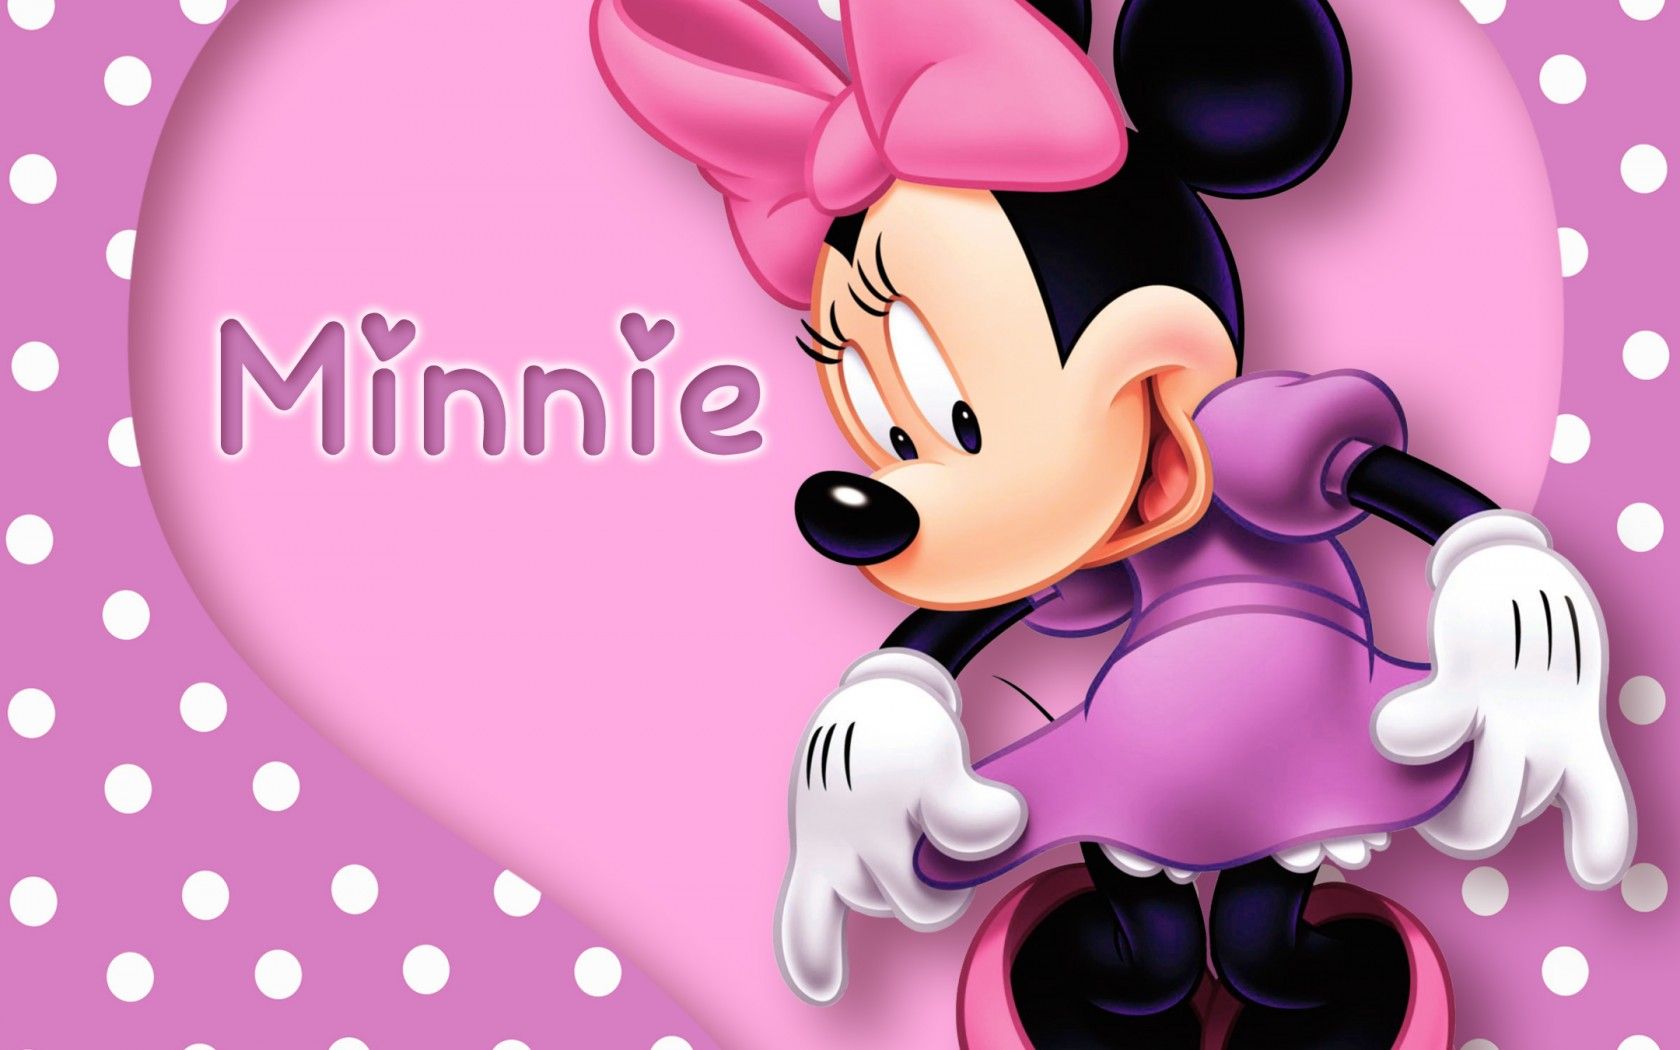 Minnie-Wallpaper-mouse-cartoon-disney-pink-purple-polka-dots-heart.jpg